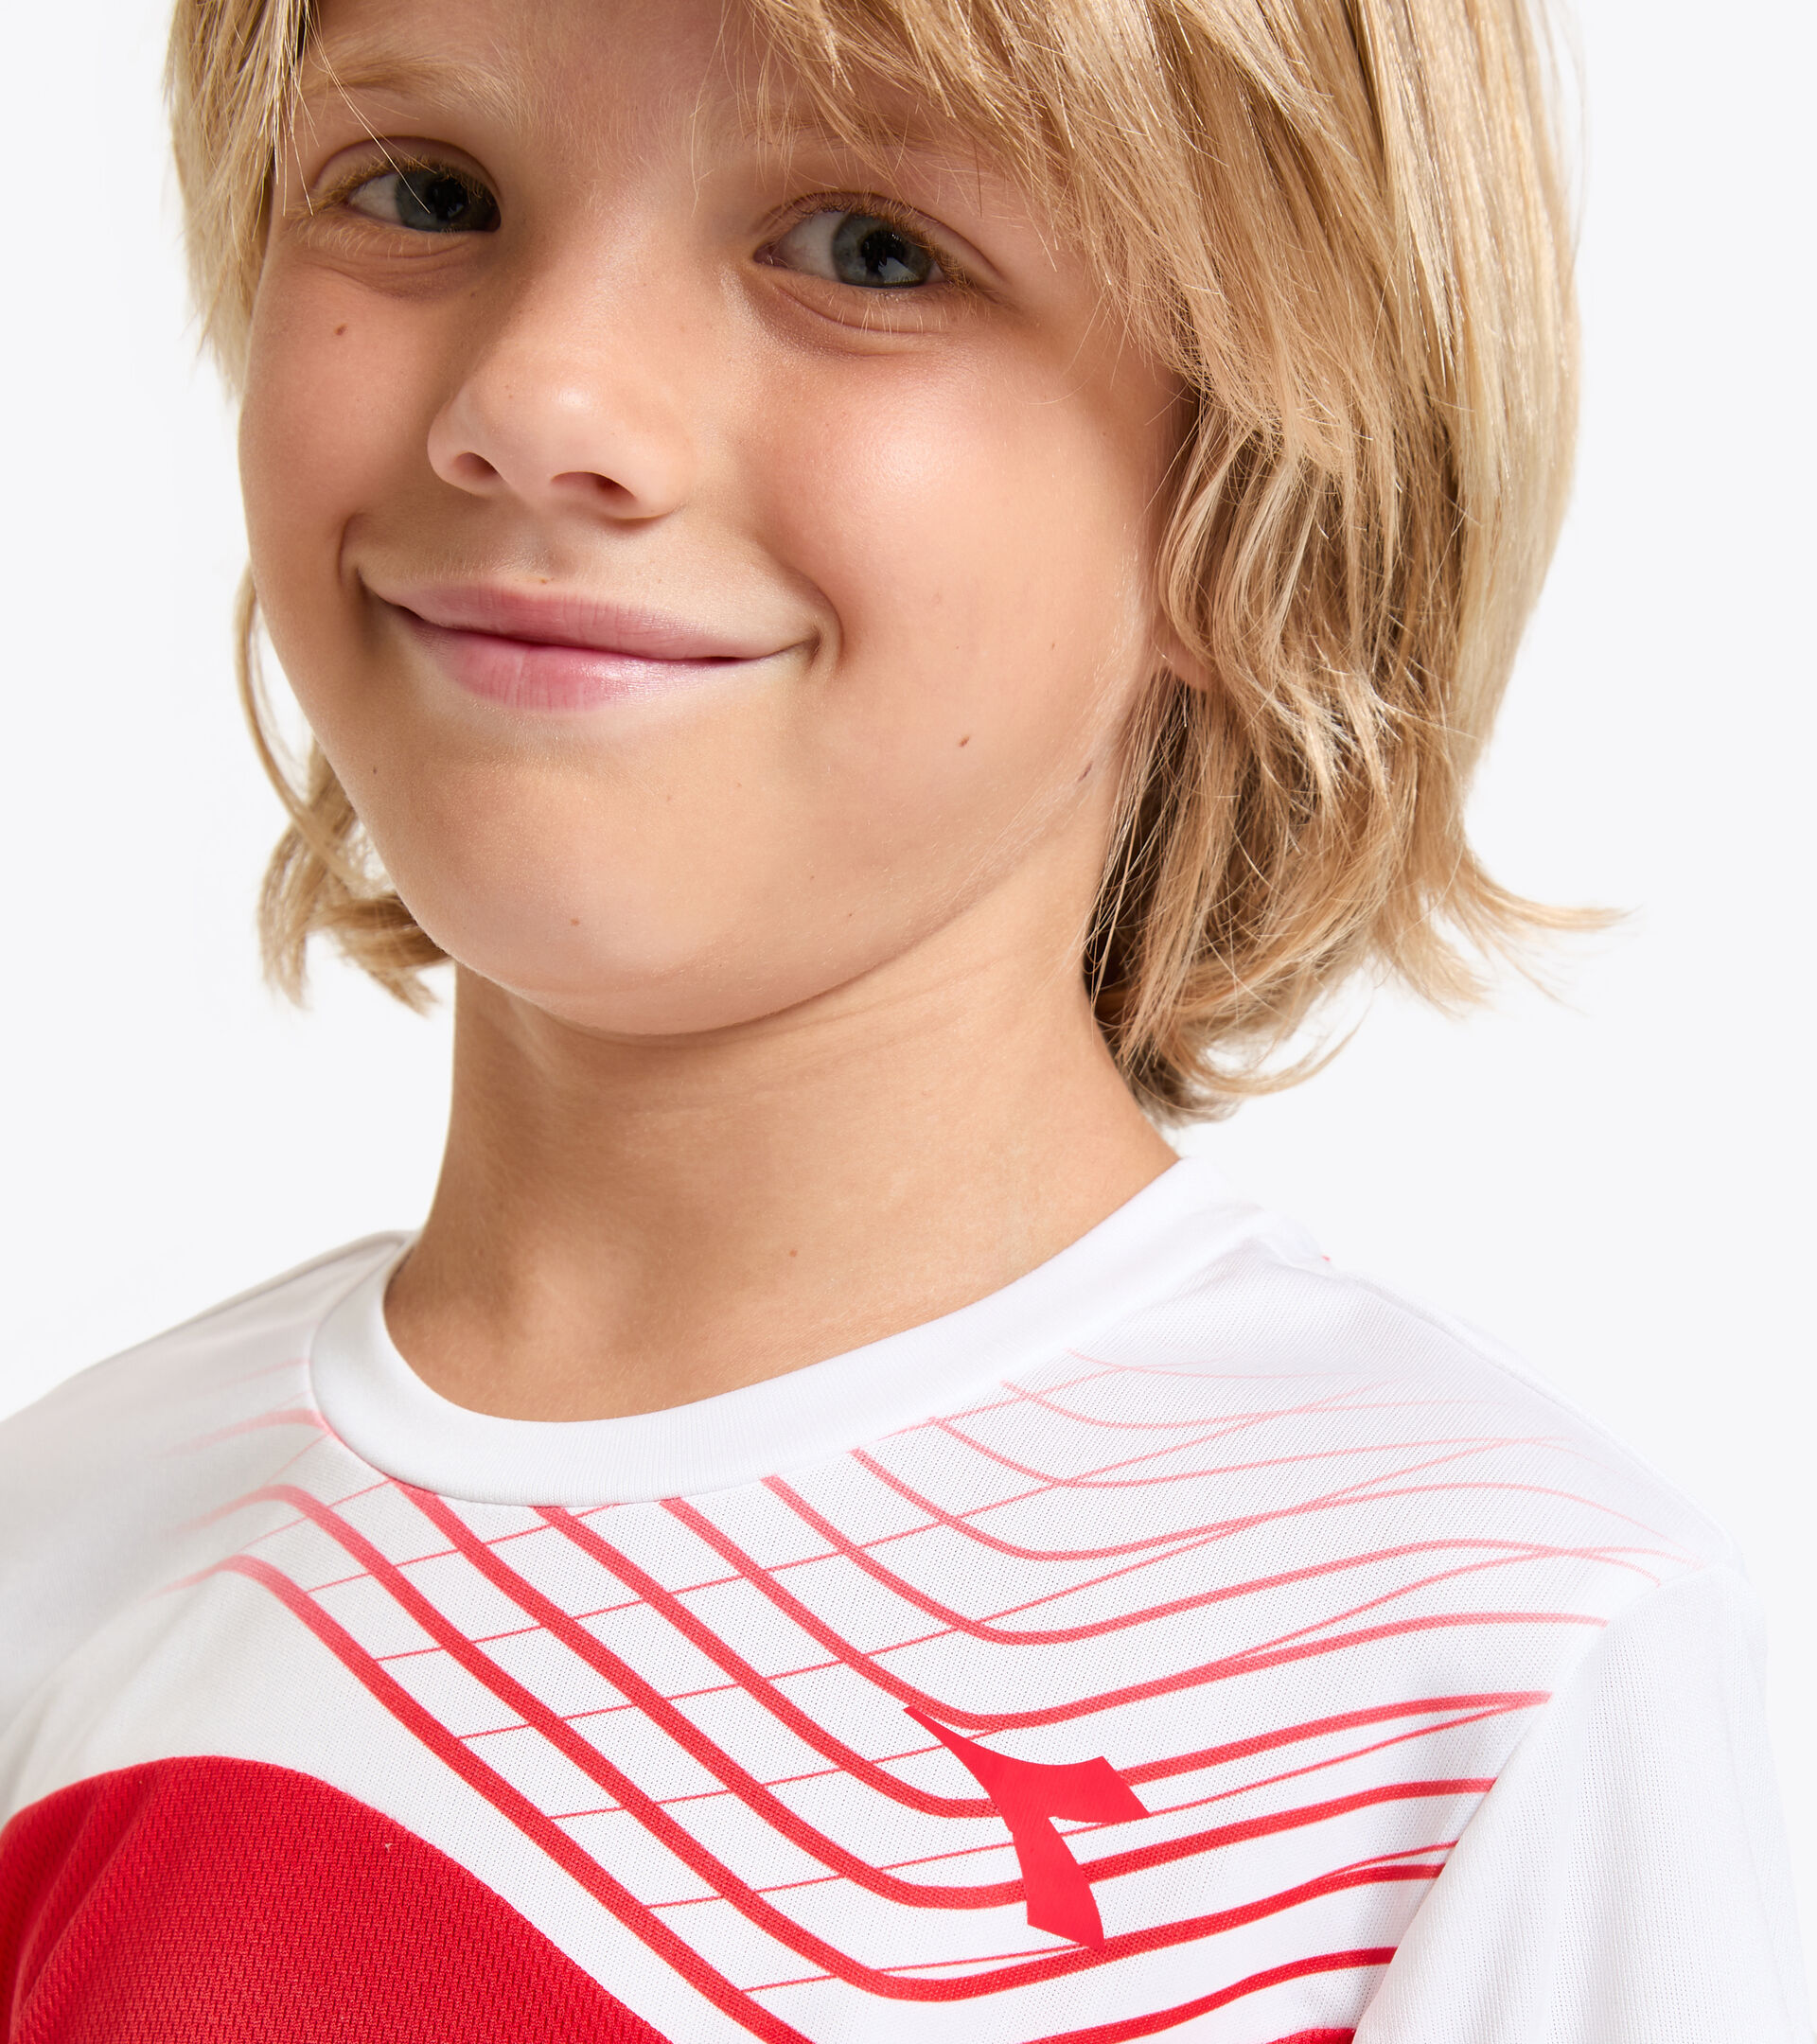 T-shirt de tennis - Junior J. T-SHIRT COURT ROUGE TOMATE - Diadora